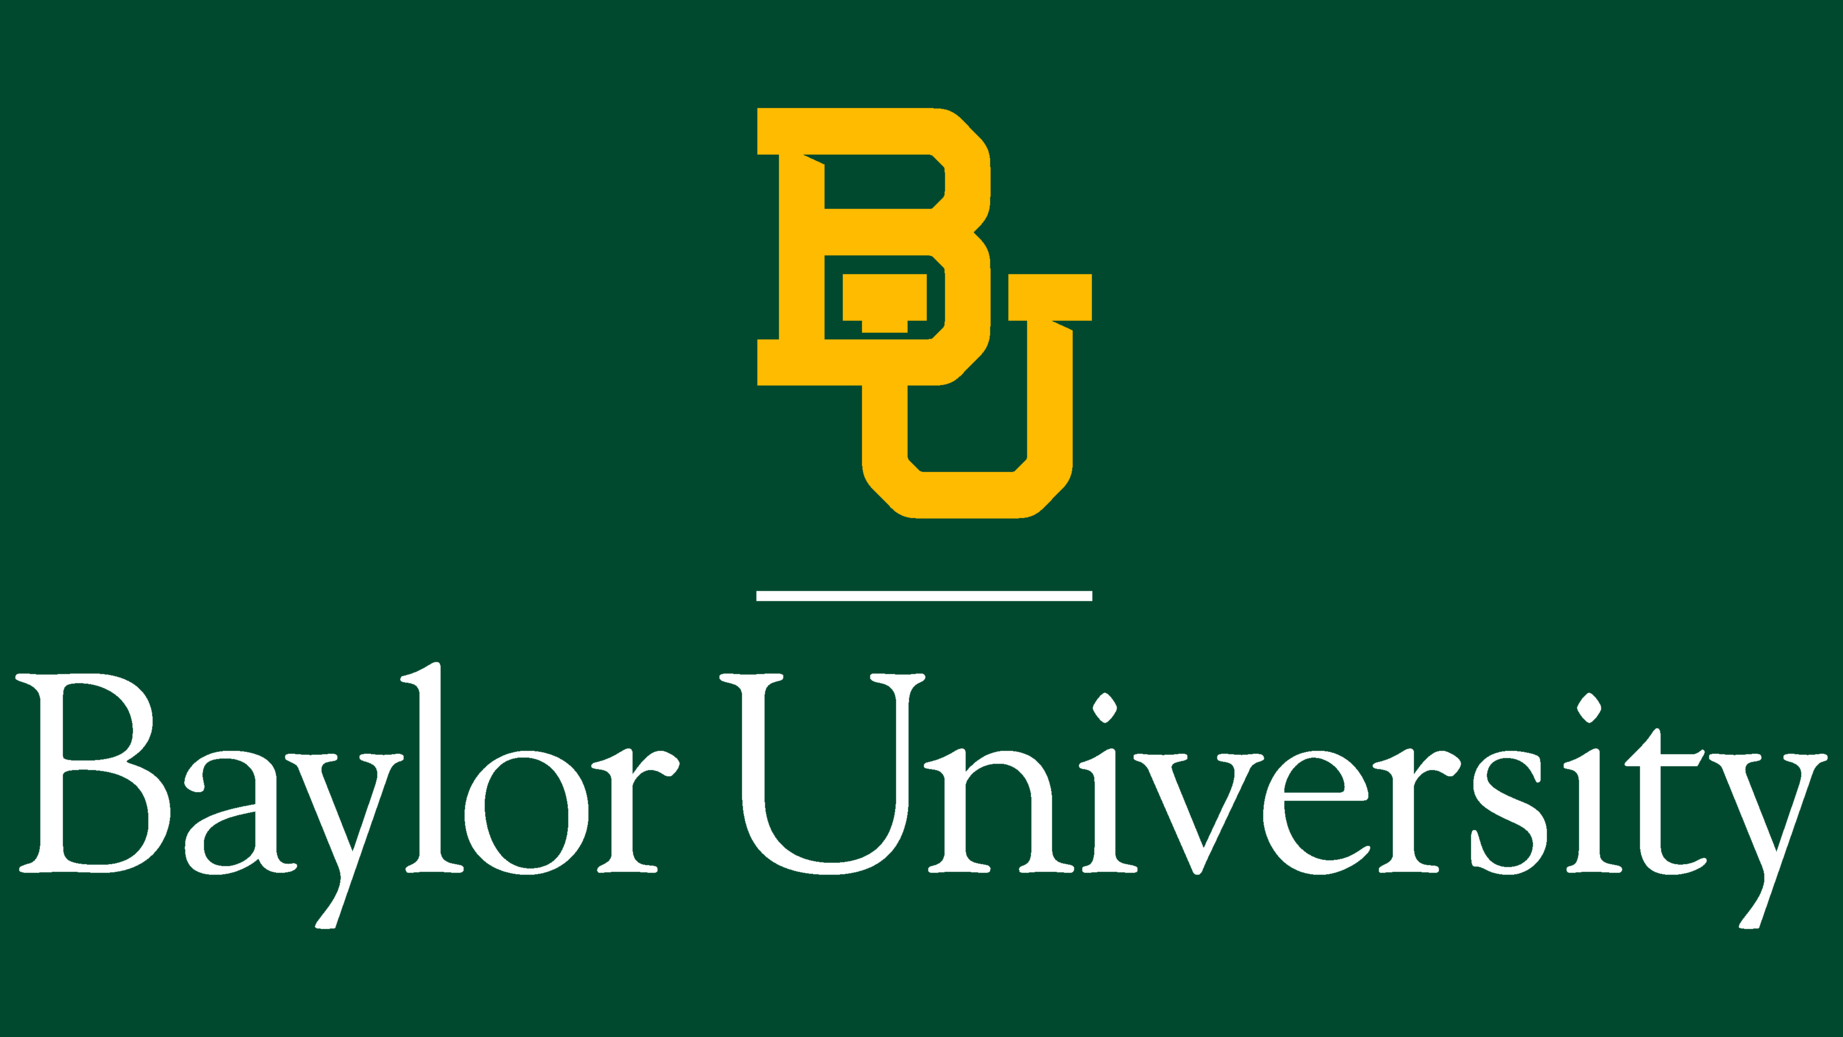 Baylor university logo